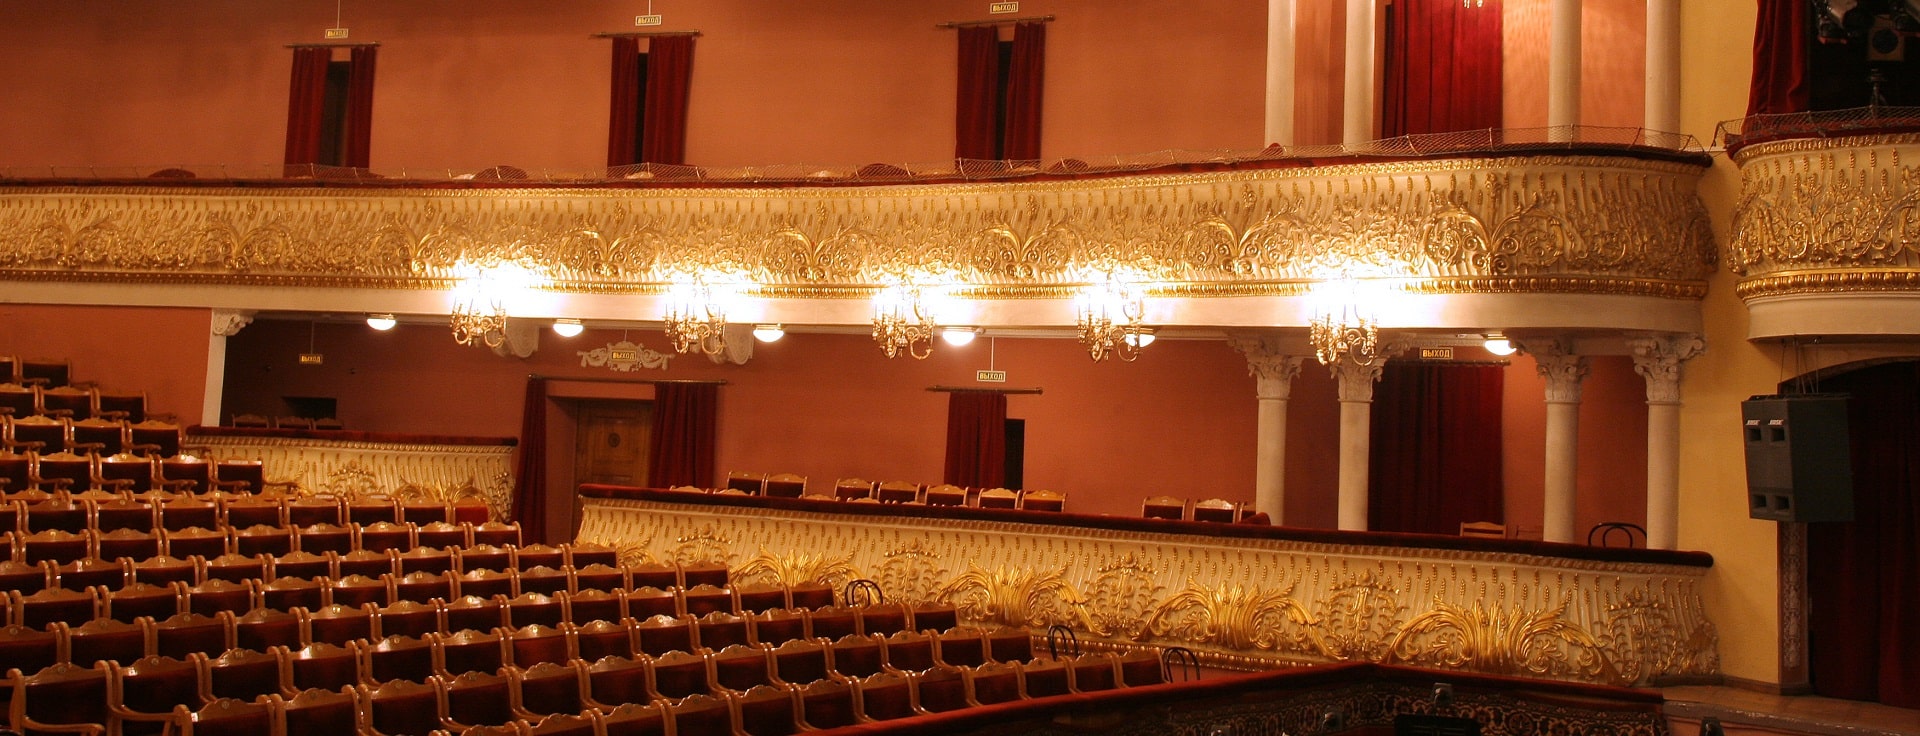 Театр оперы и балета имени М. И. Глинки